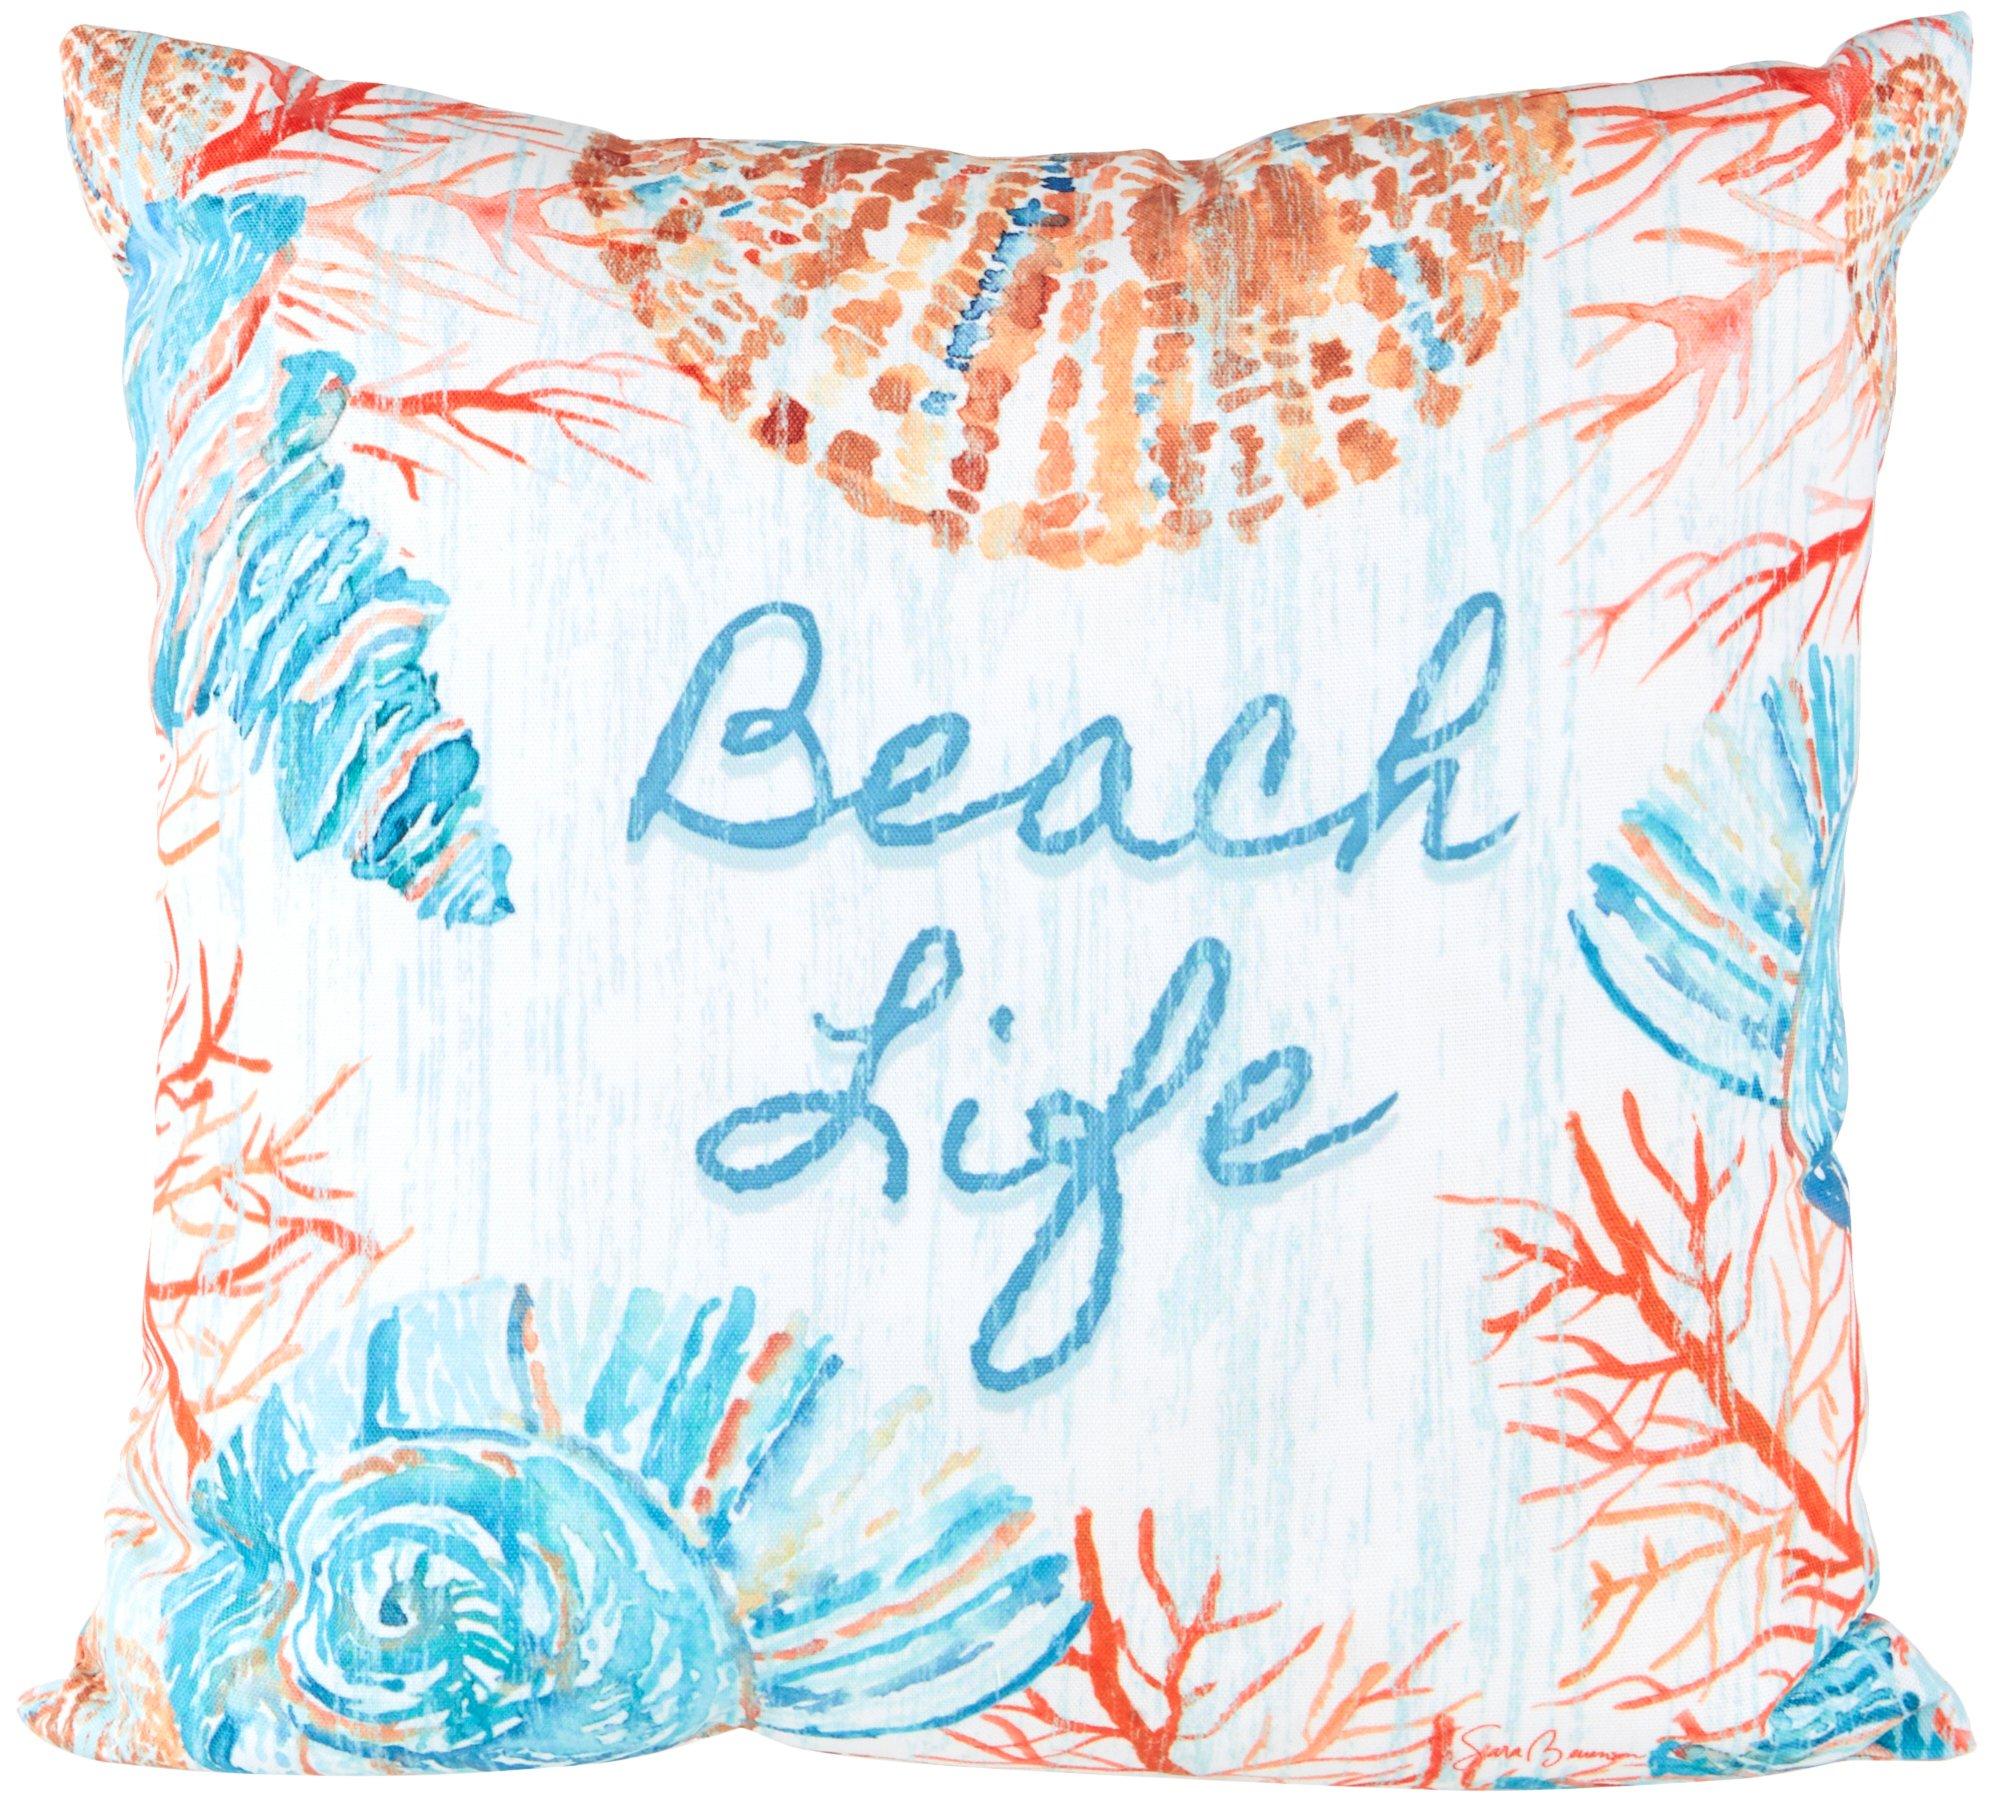 18x18 Beach Life Outdoor Pillow